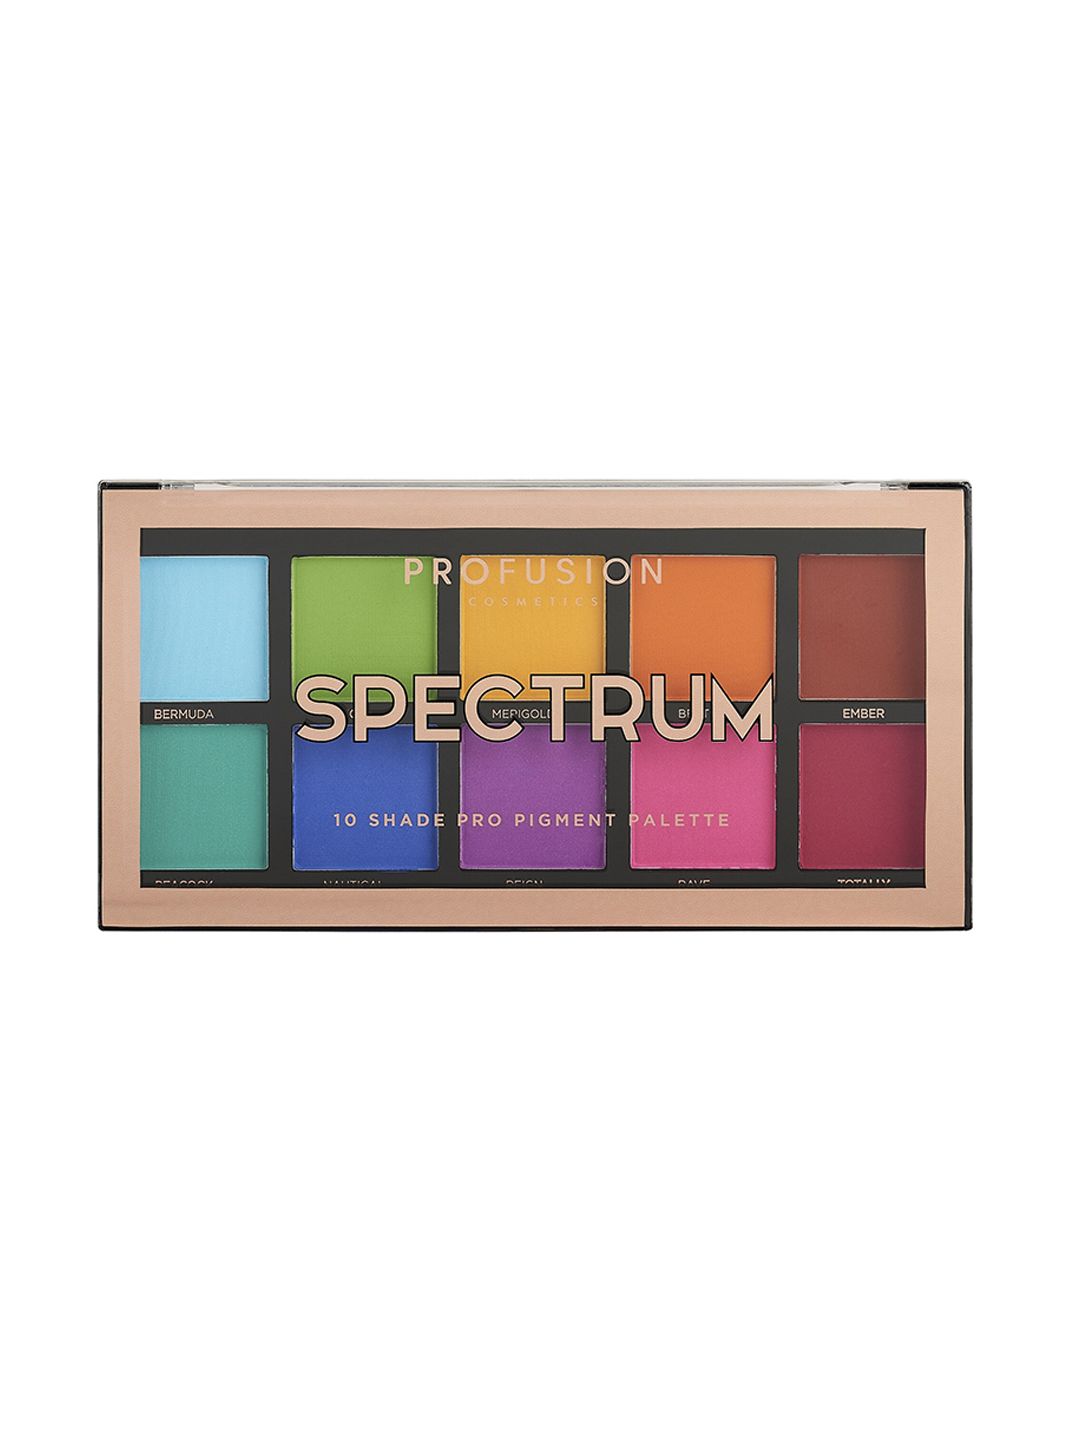 PROFUSION COSMETICS Spectrum 10 Shade Pro Pigment Palette 16 gm Price in India